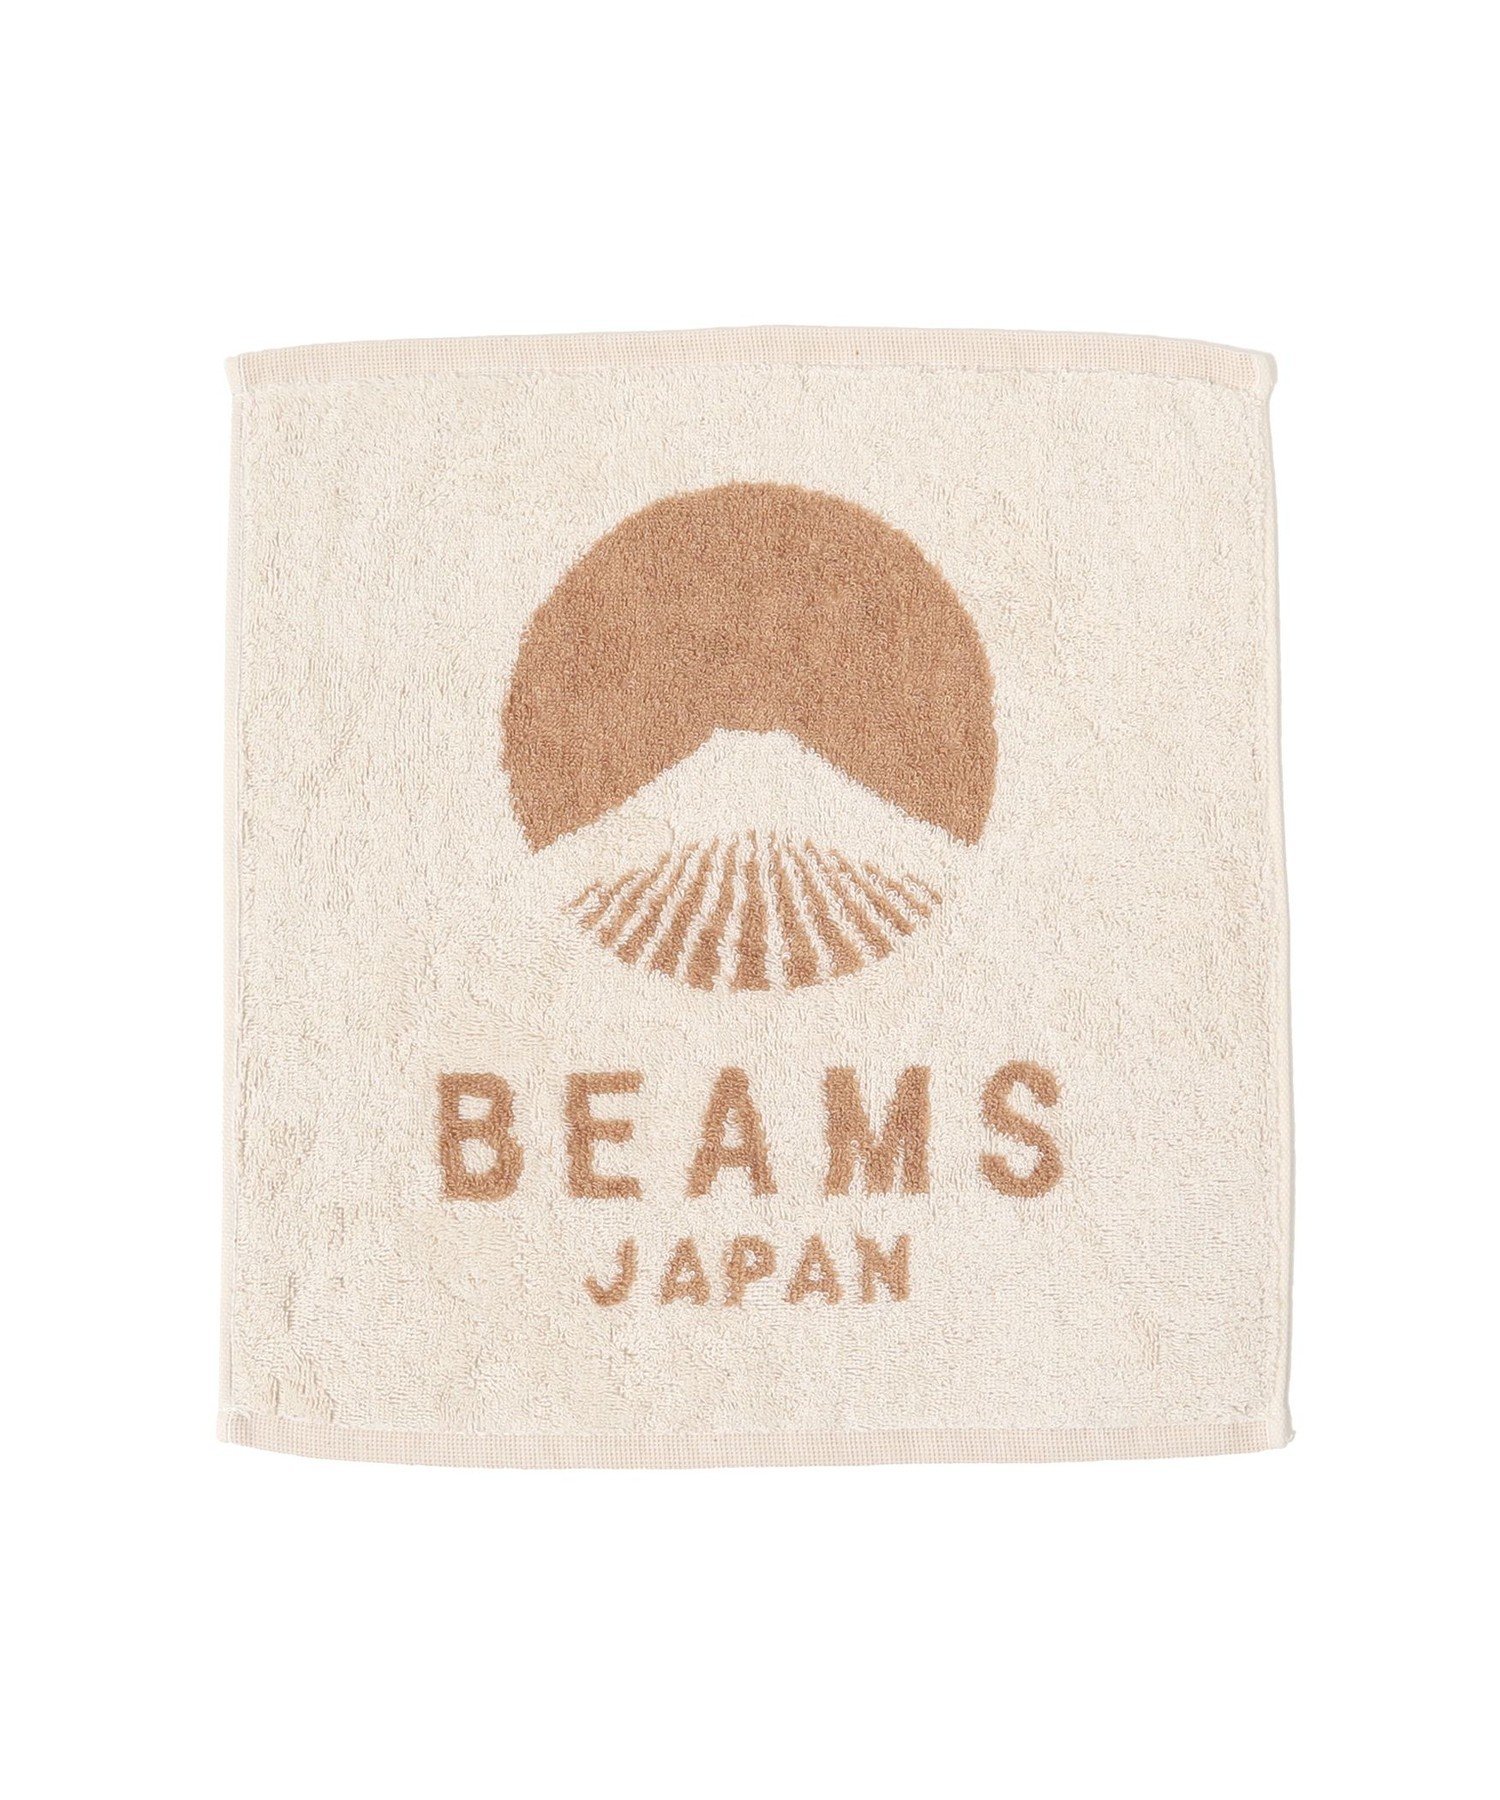 BEAMS JAPAN(ビームス ジャパン)のファッションアイテム一覧 | Rakuten 